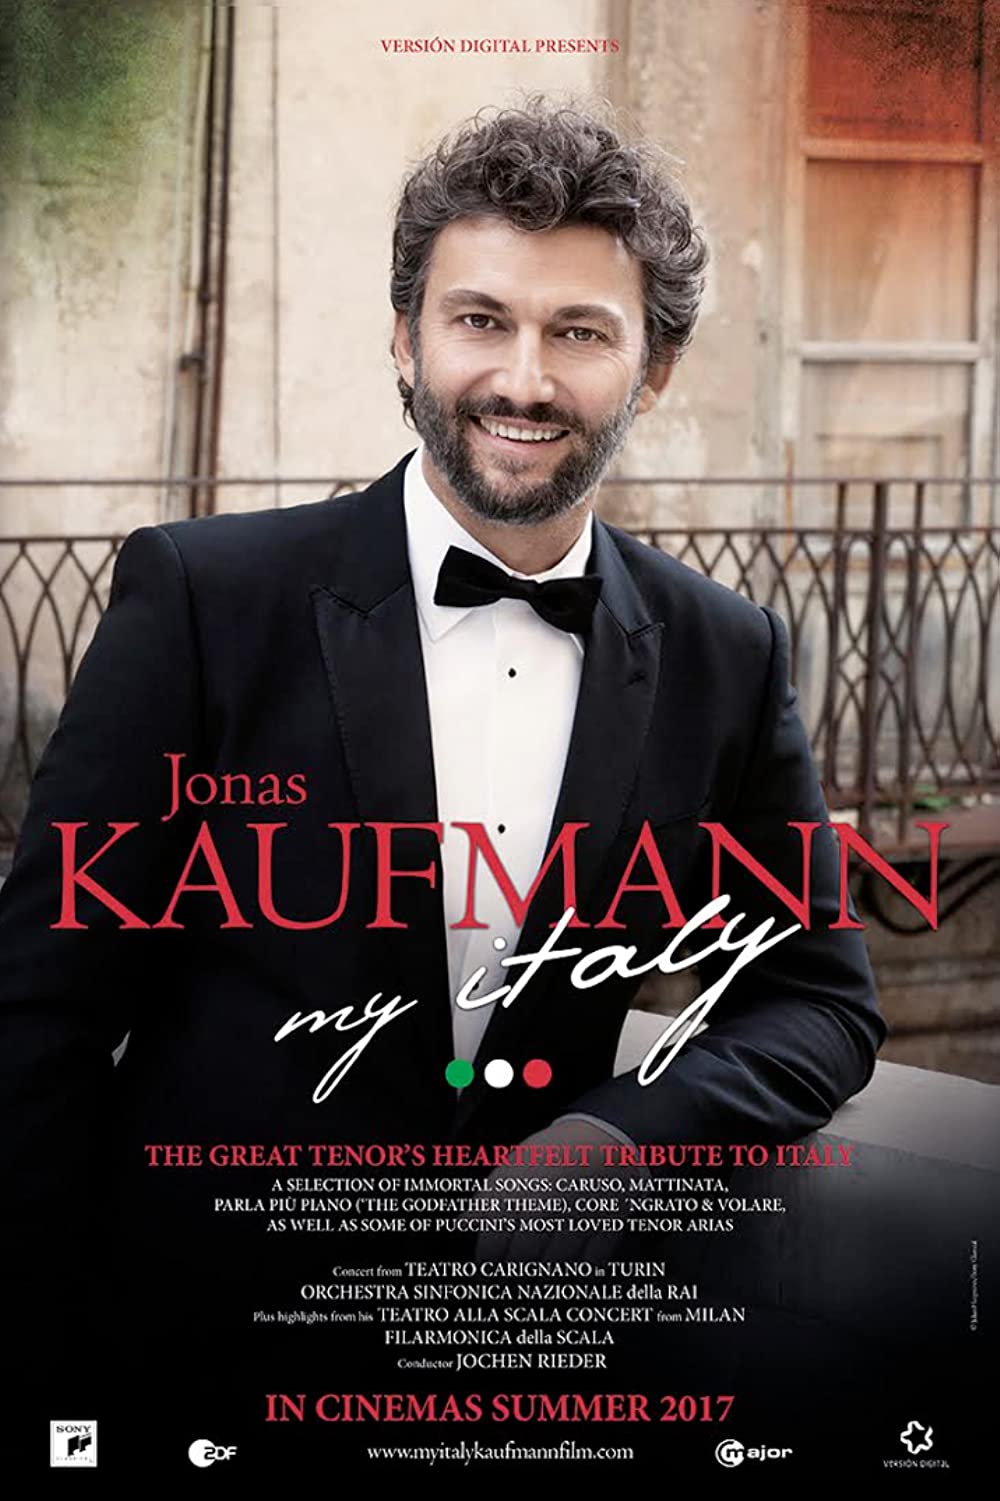 Filmbeschreibung zu Jonas Kaufmann - My Italy